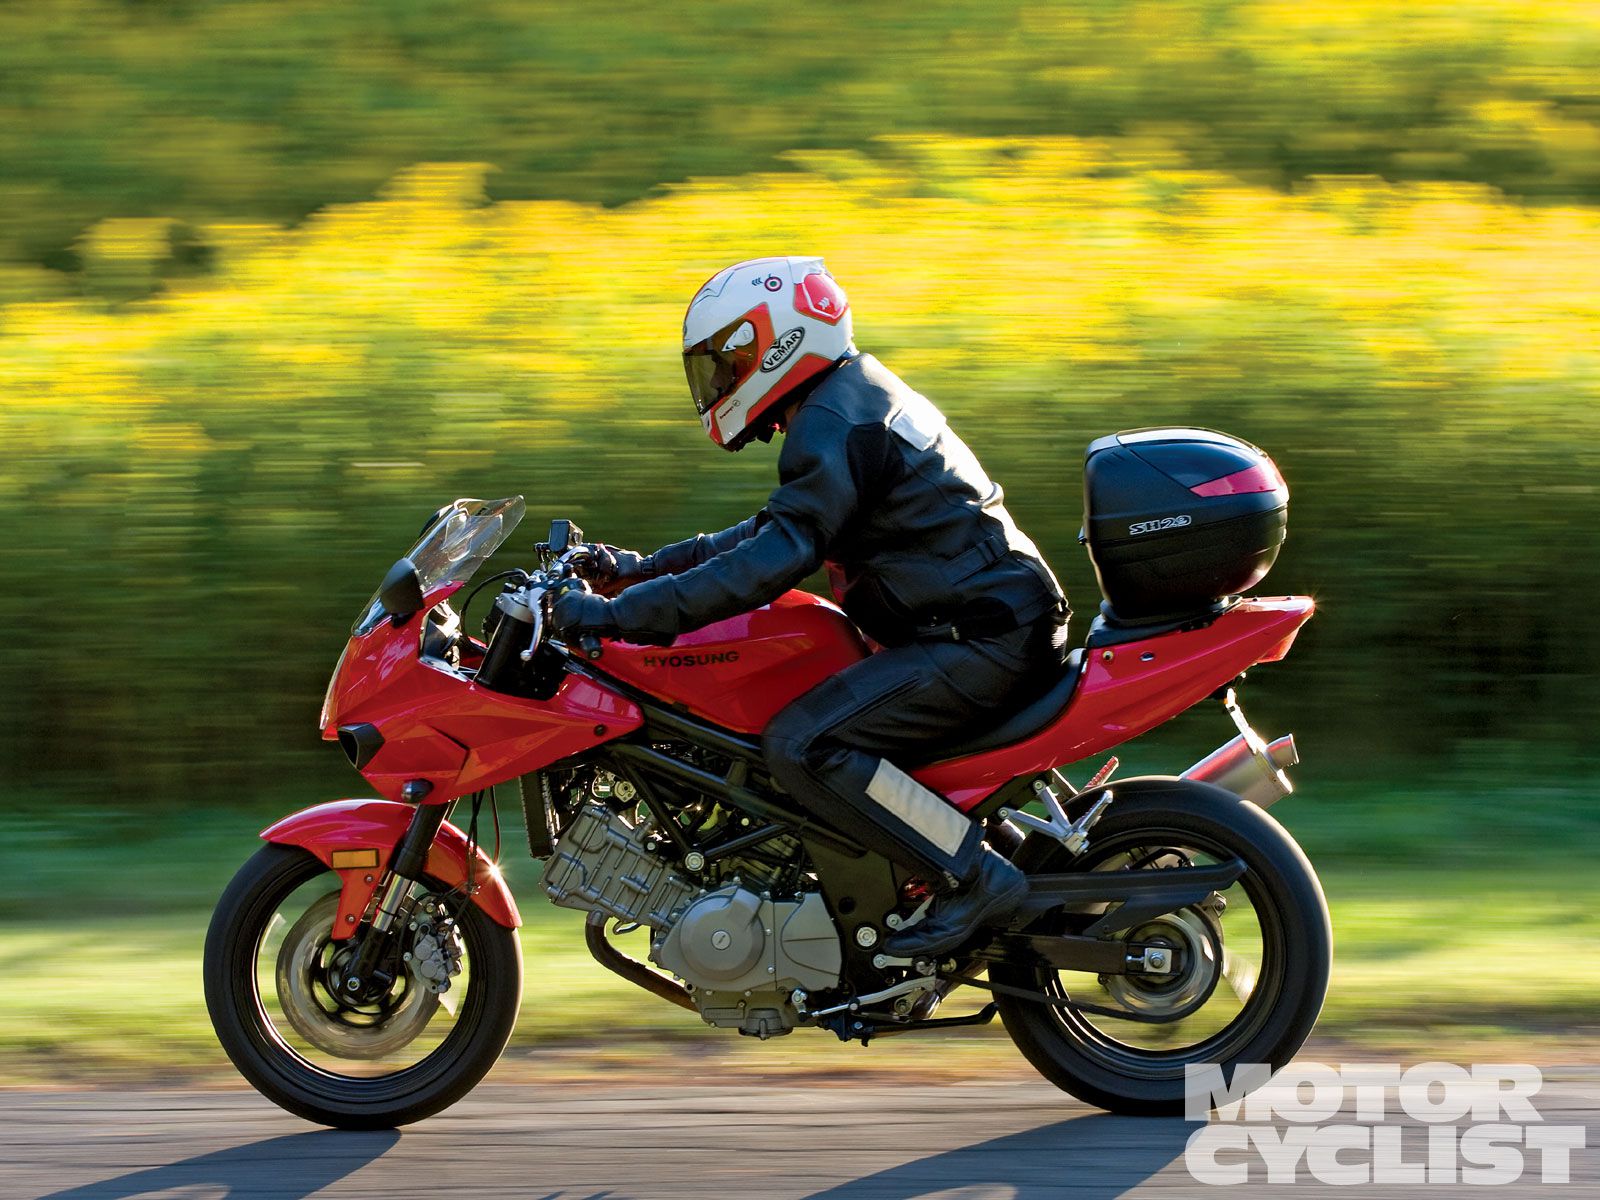 Hyosung GT650R Motorcycle | Motorcyclist